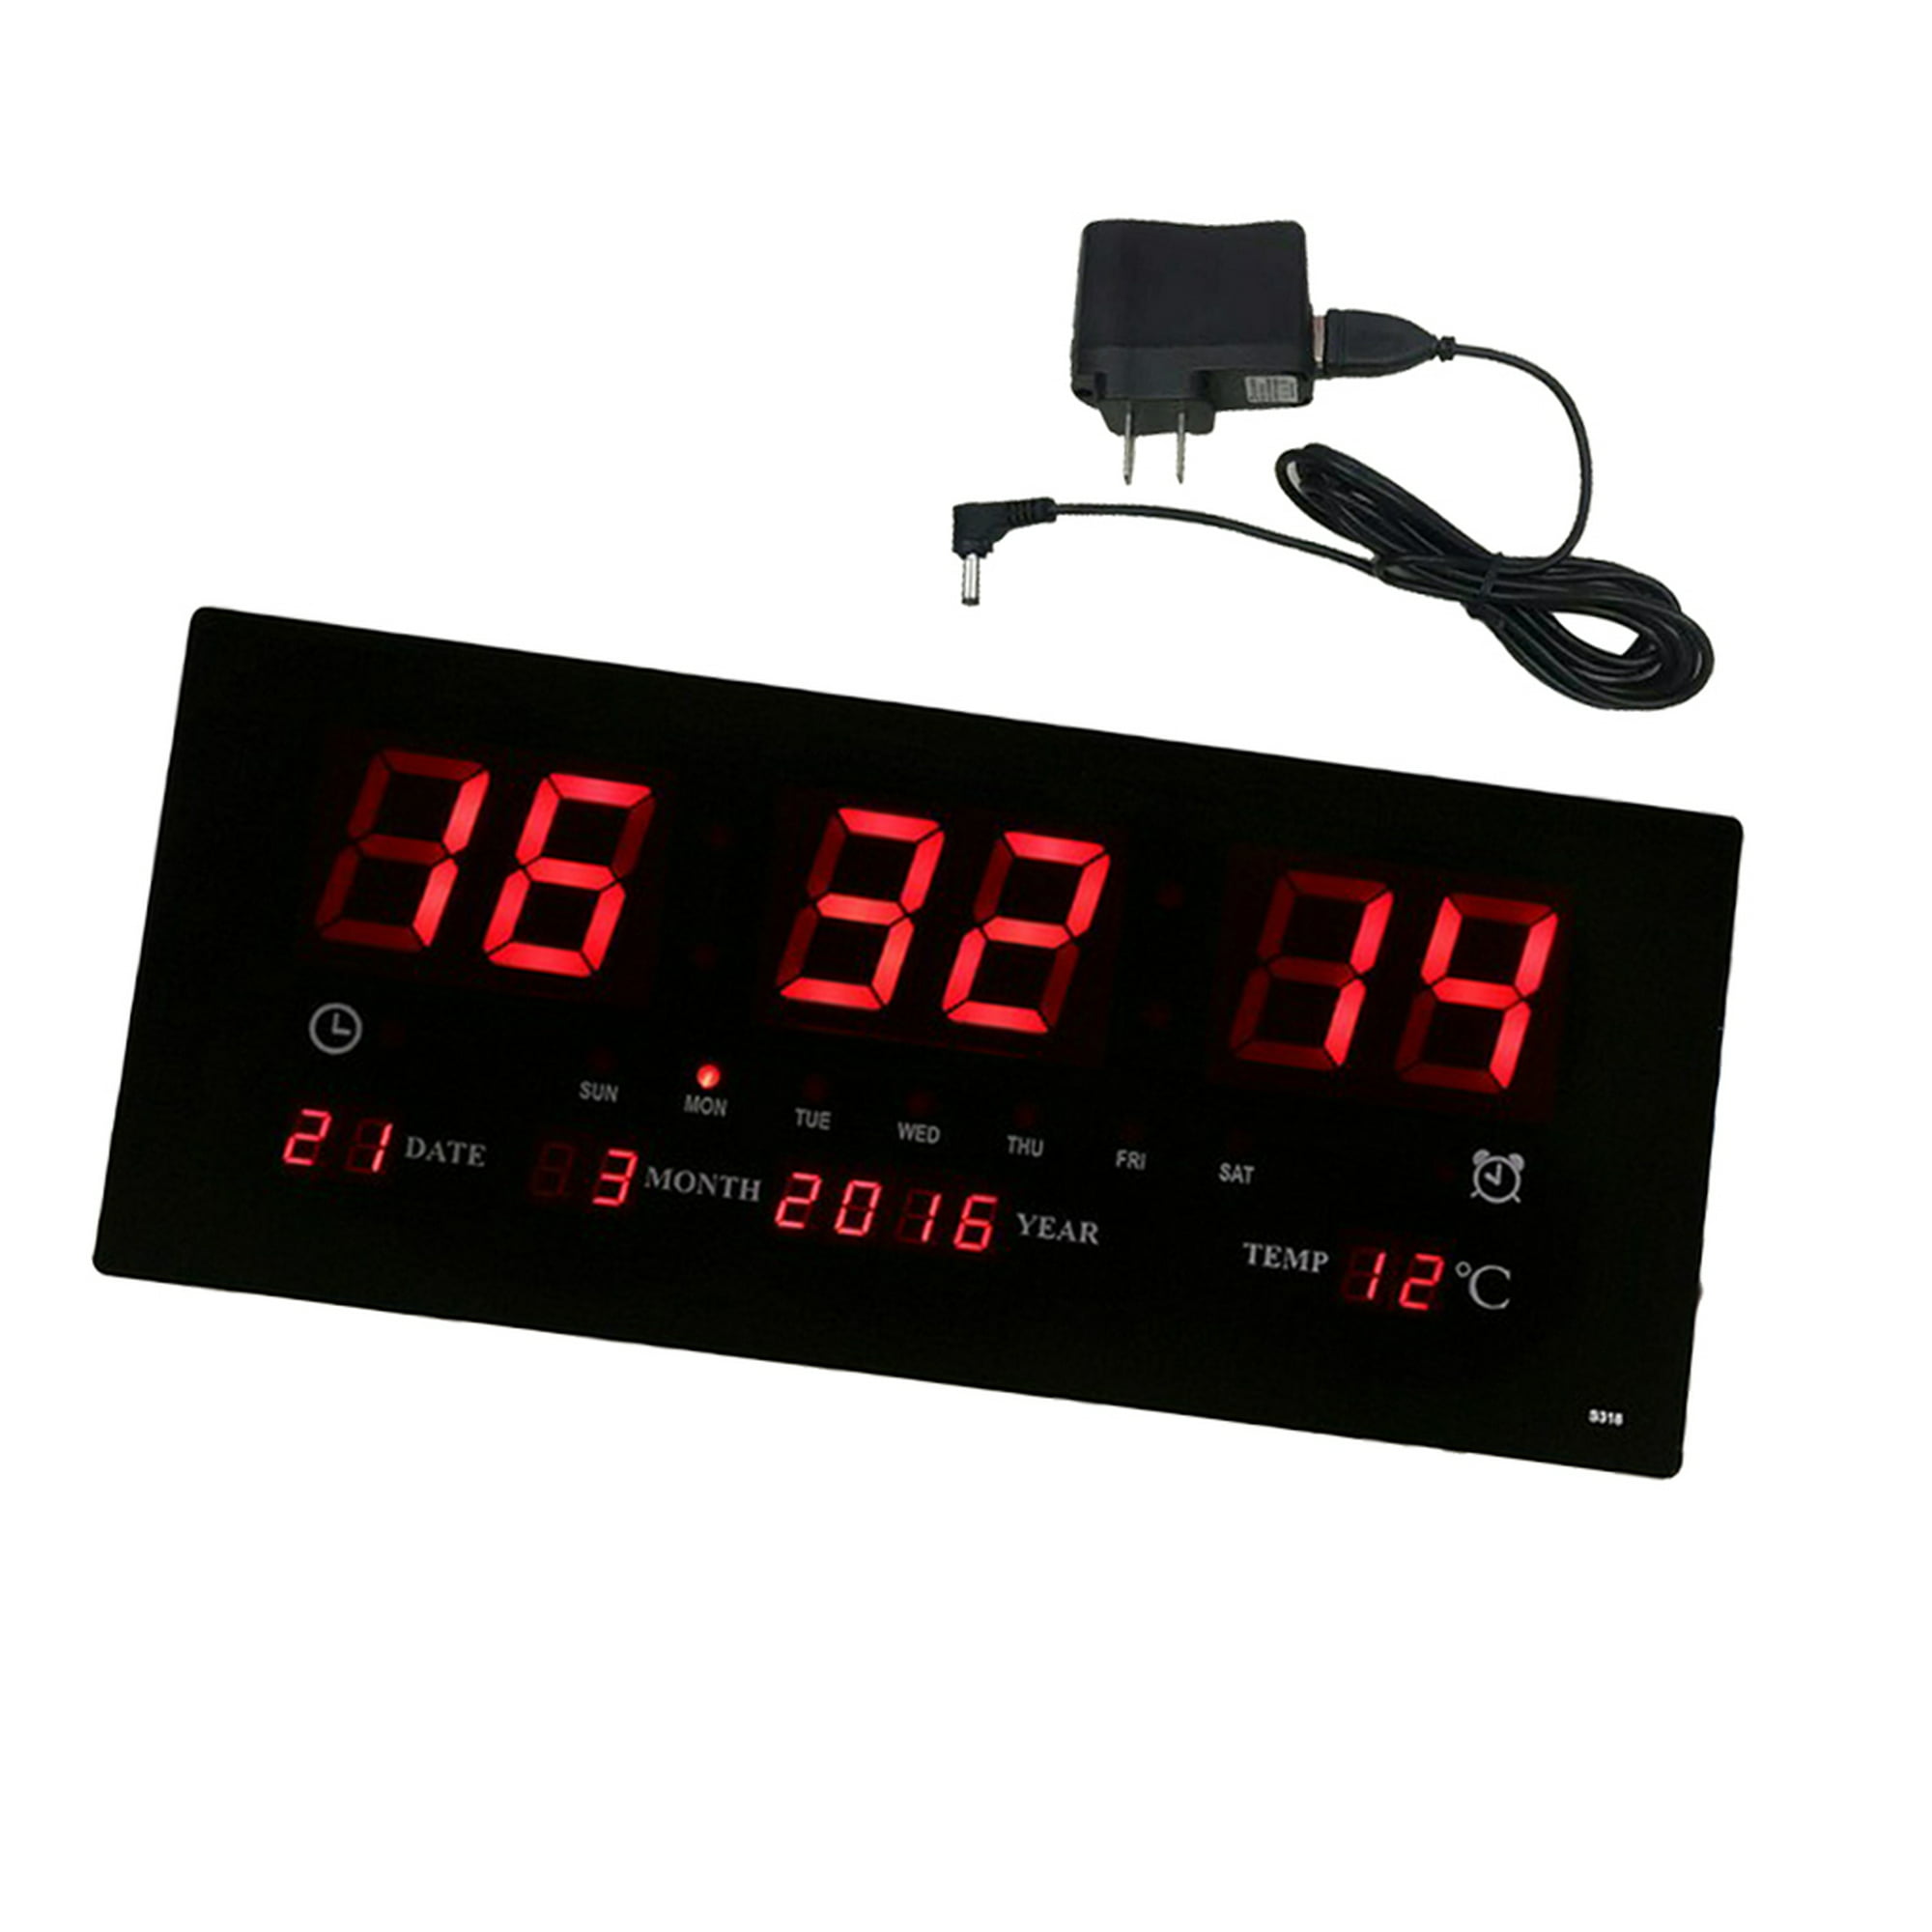 Reloj De Pared Digital Calendario Timema con Ofertas en Carrefour